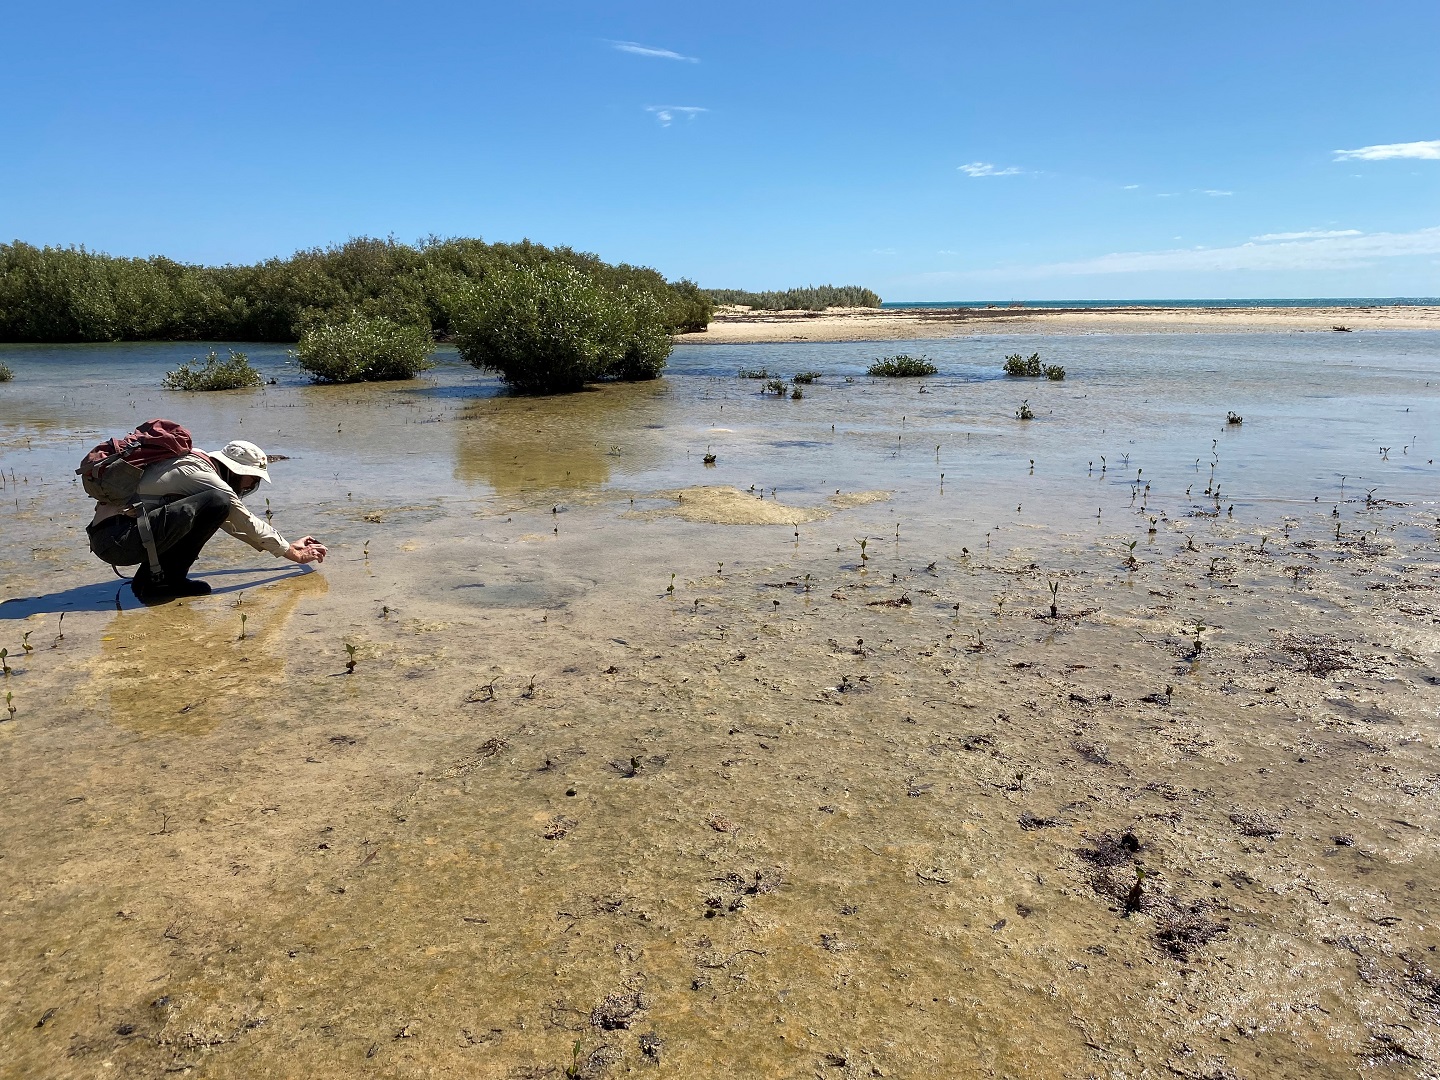 Image credit: Catherine Lovelock, Mangrove recruitment onto a tidal flat, Mangrove Bay, Ningaloo, Western Australia 